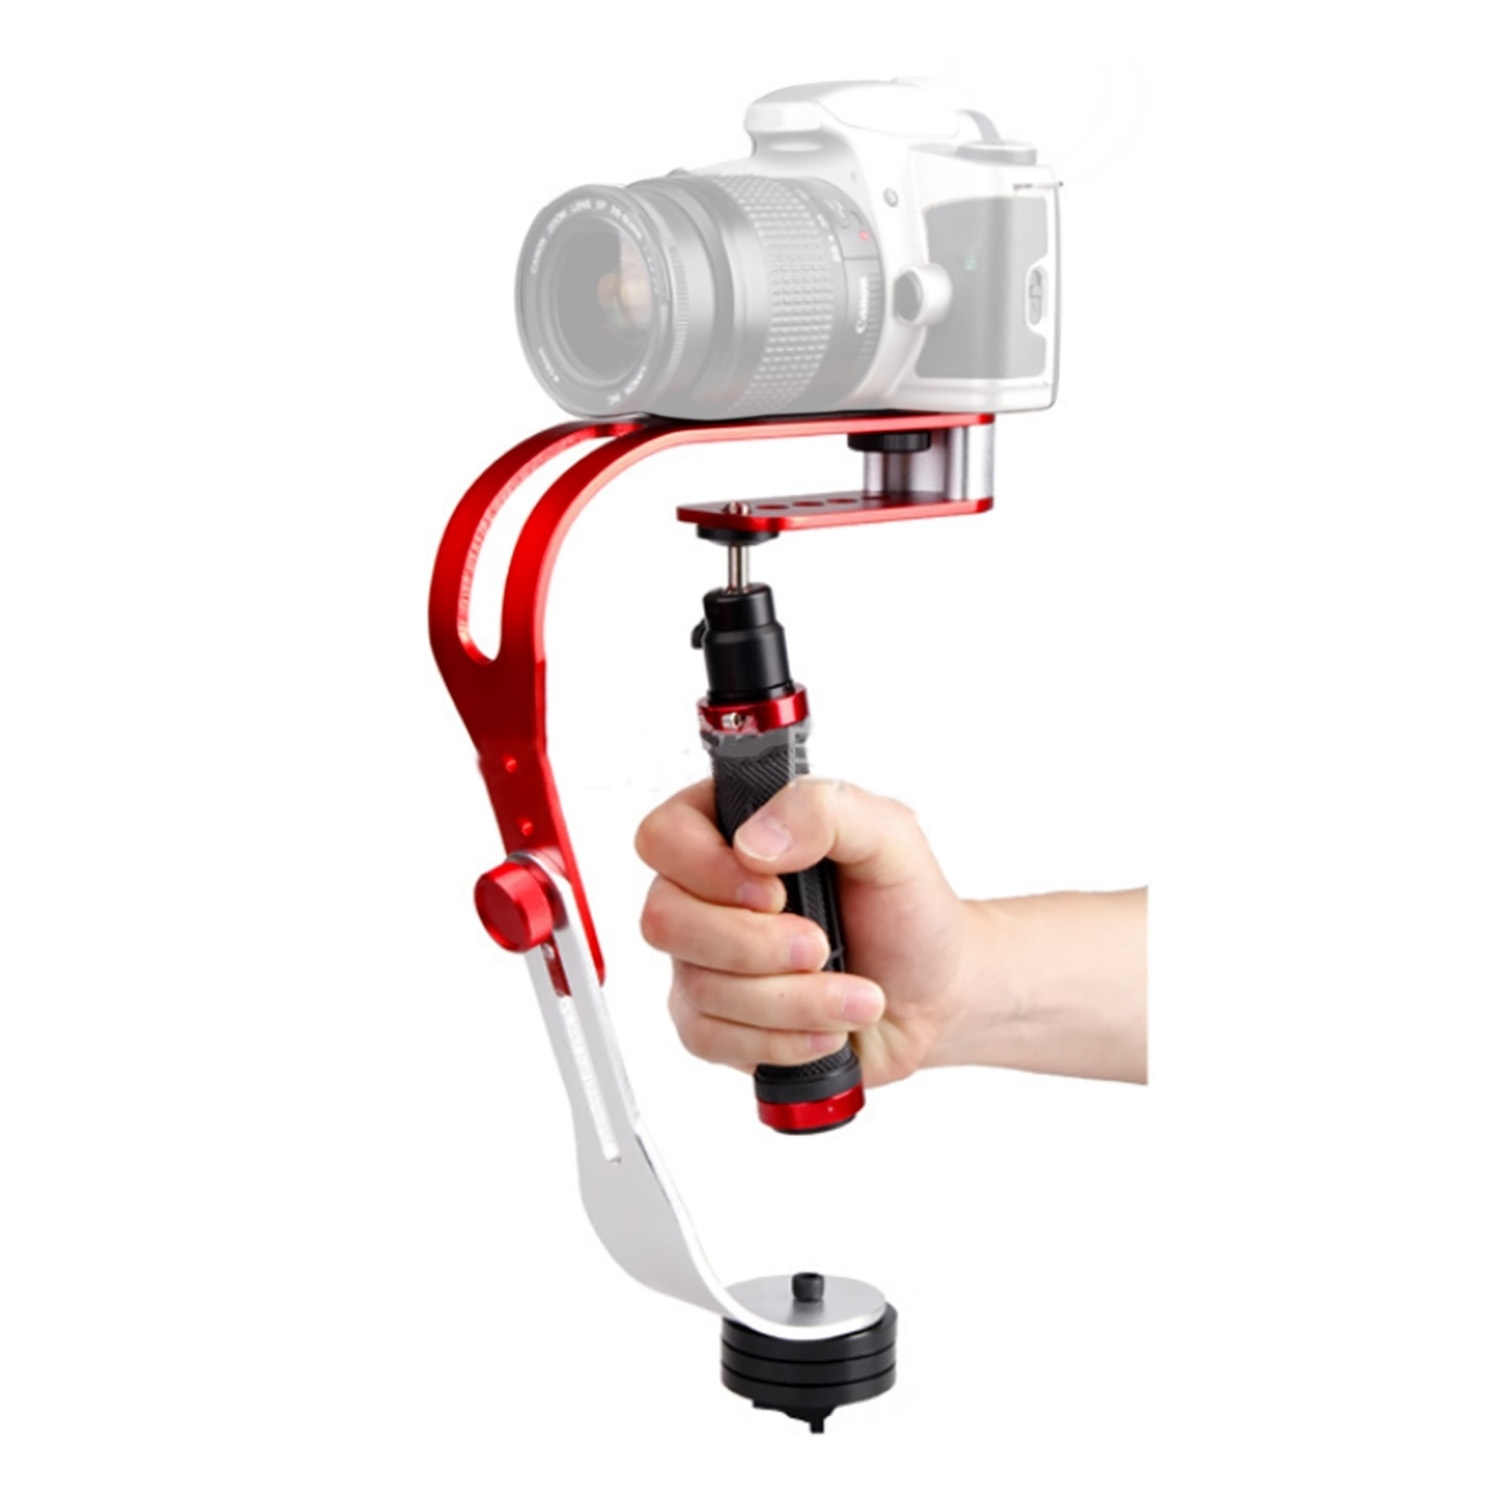        Pro Glide  Cam  GoPro Cannon Nikon   DSLR   2.1 